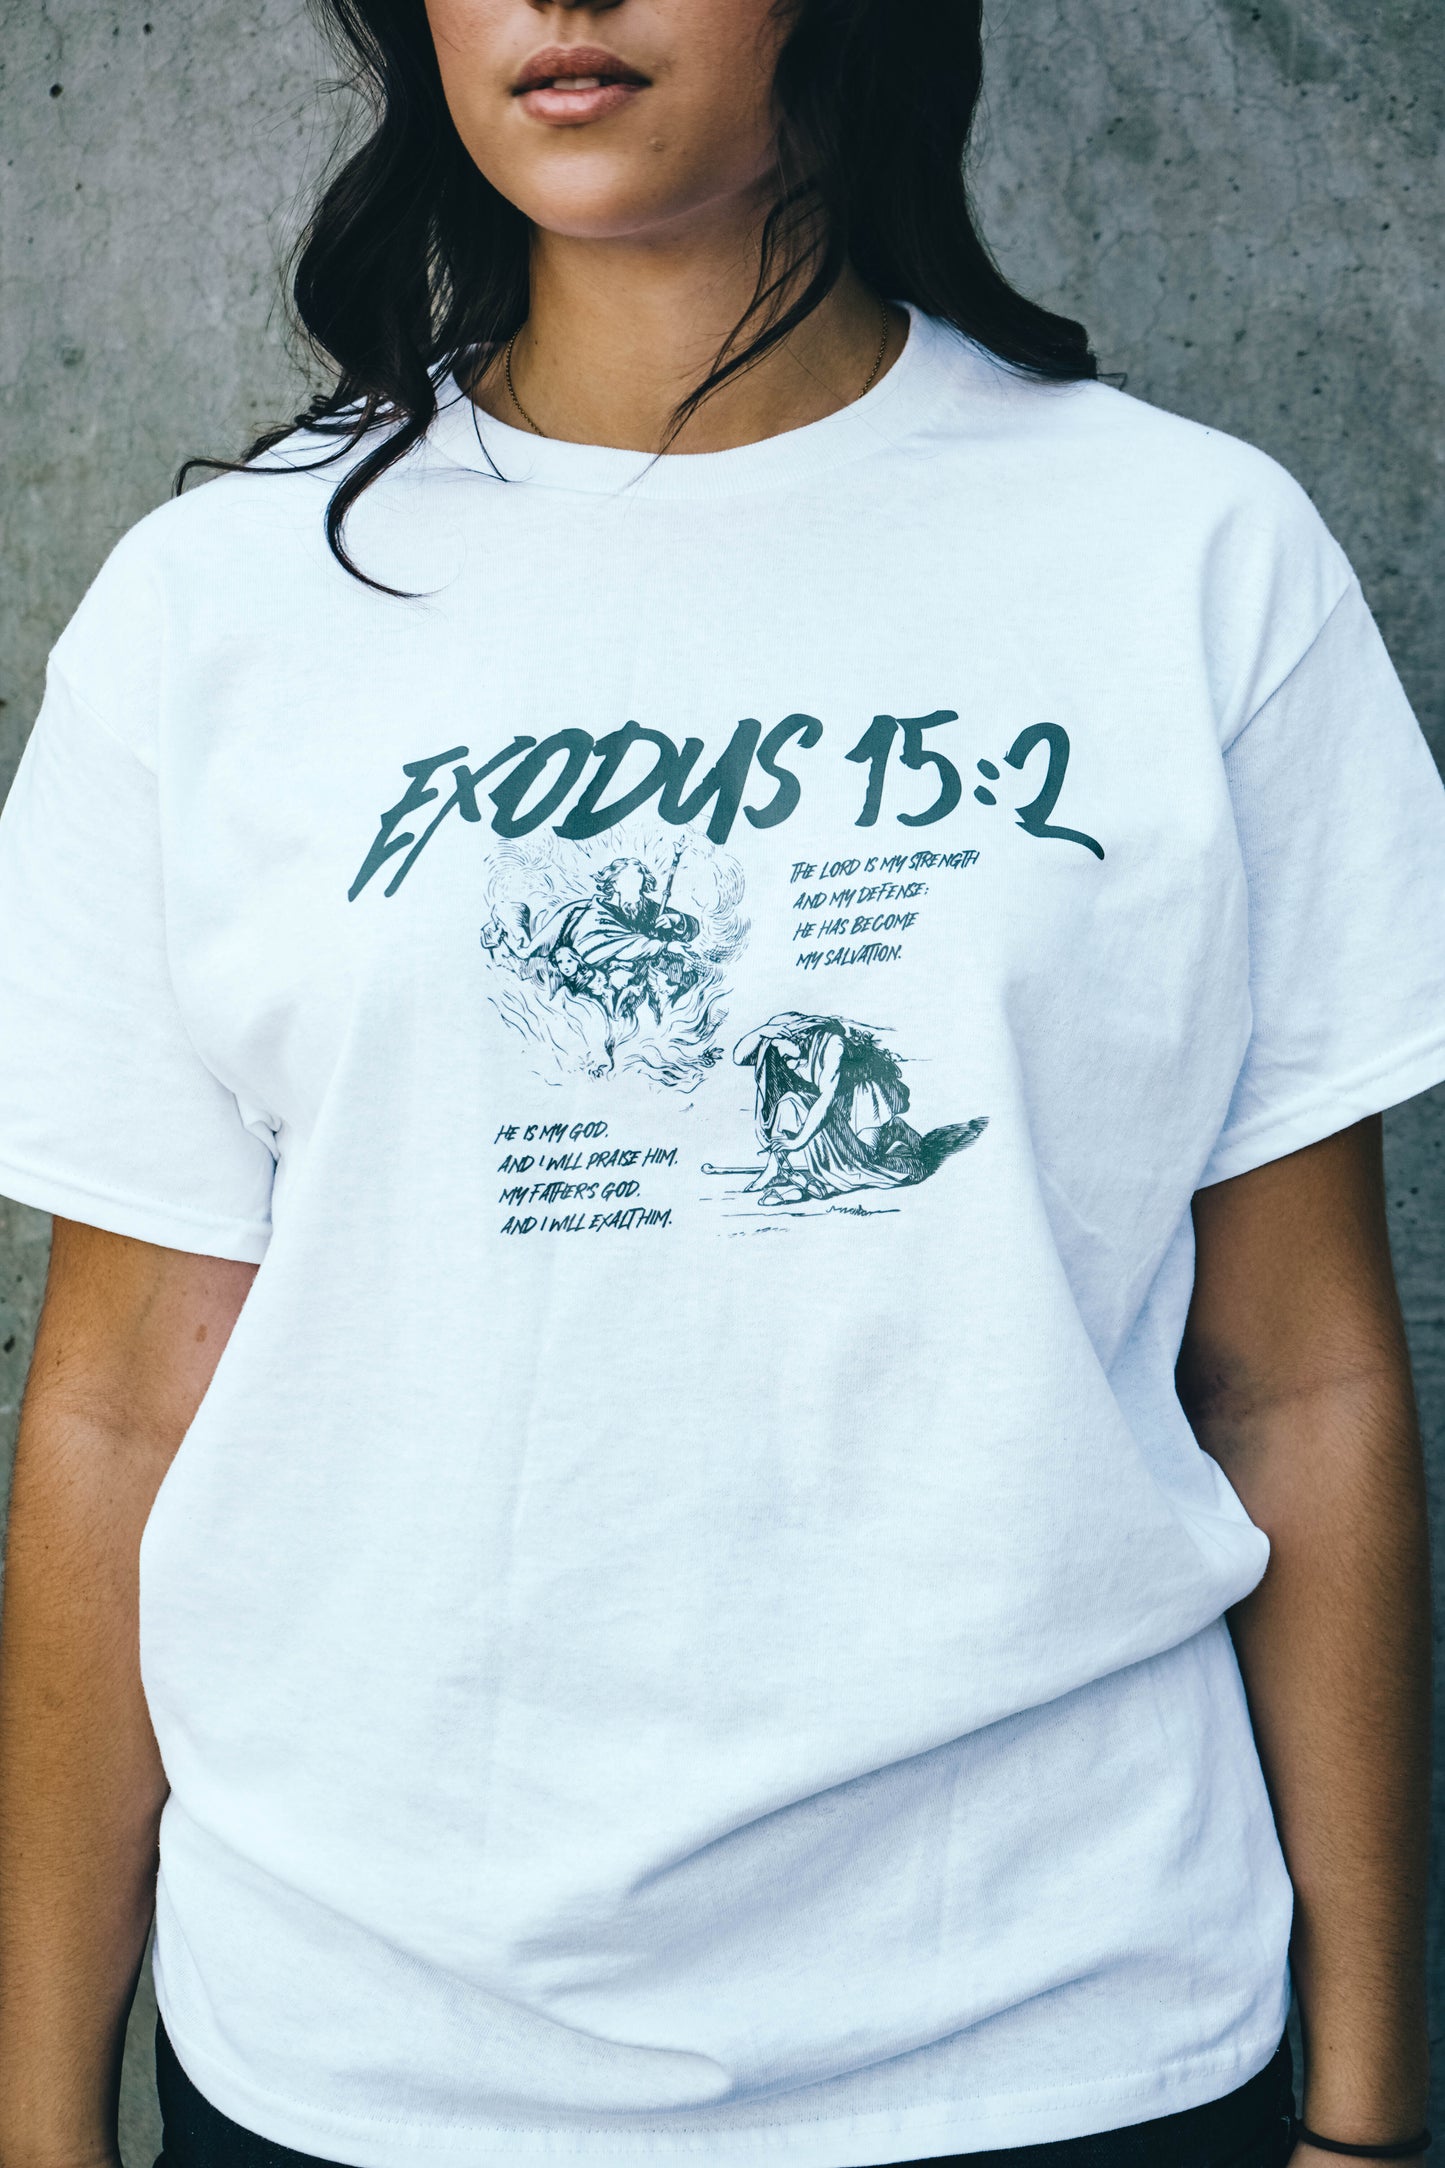 Exodus T-Shirt